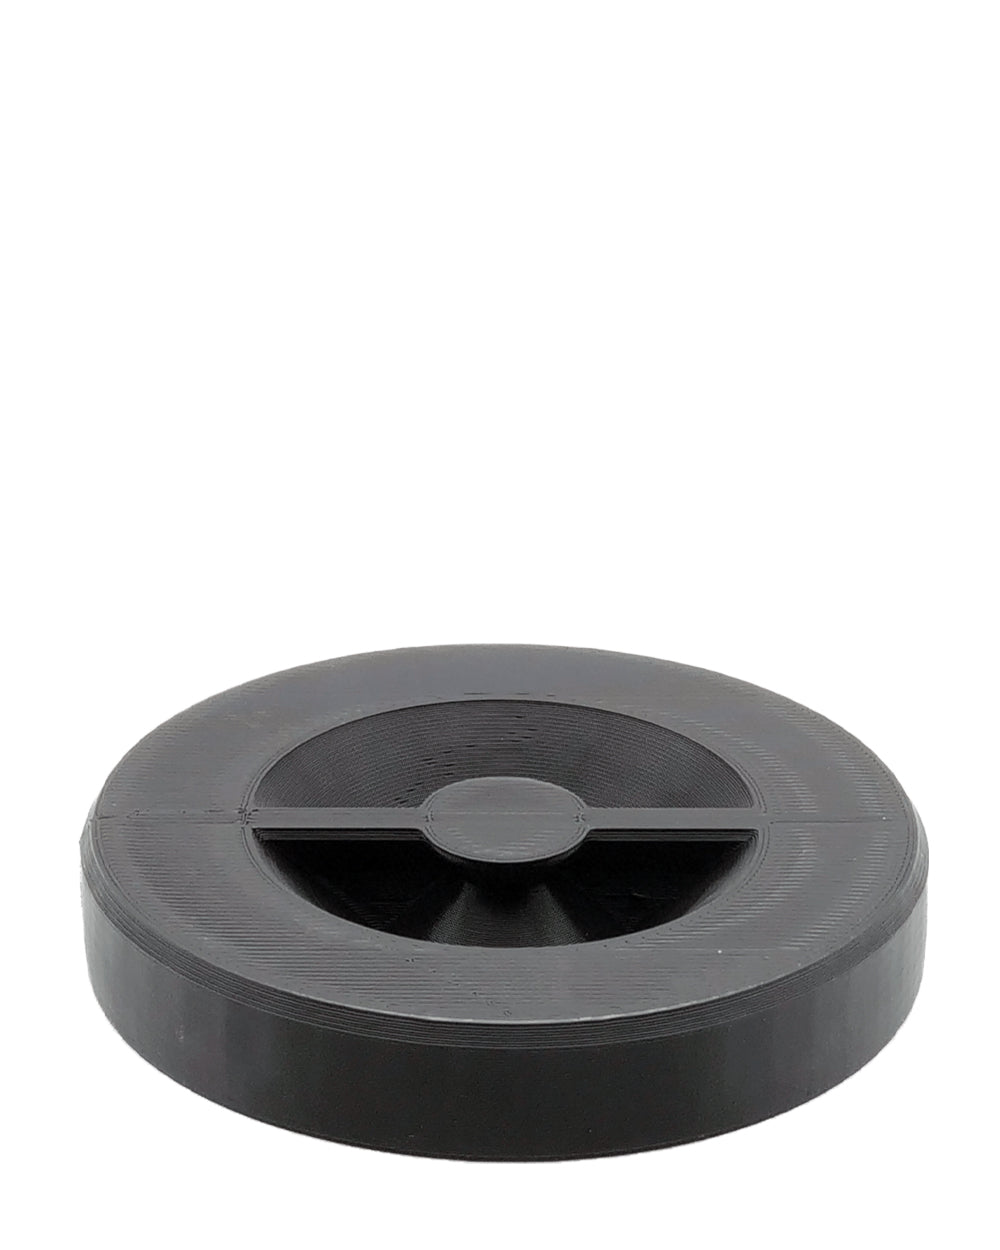 HUMBOLDT | Black Pre-Rolled Cones Filling Machine Cartridge 109mm | Fill 121 Cones Per Run - 3